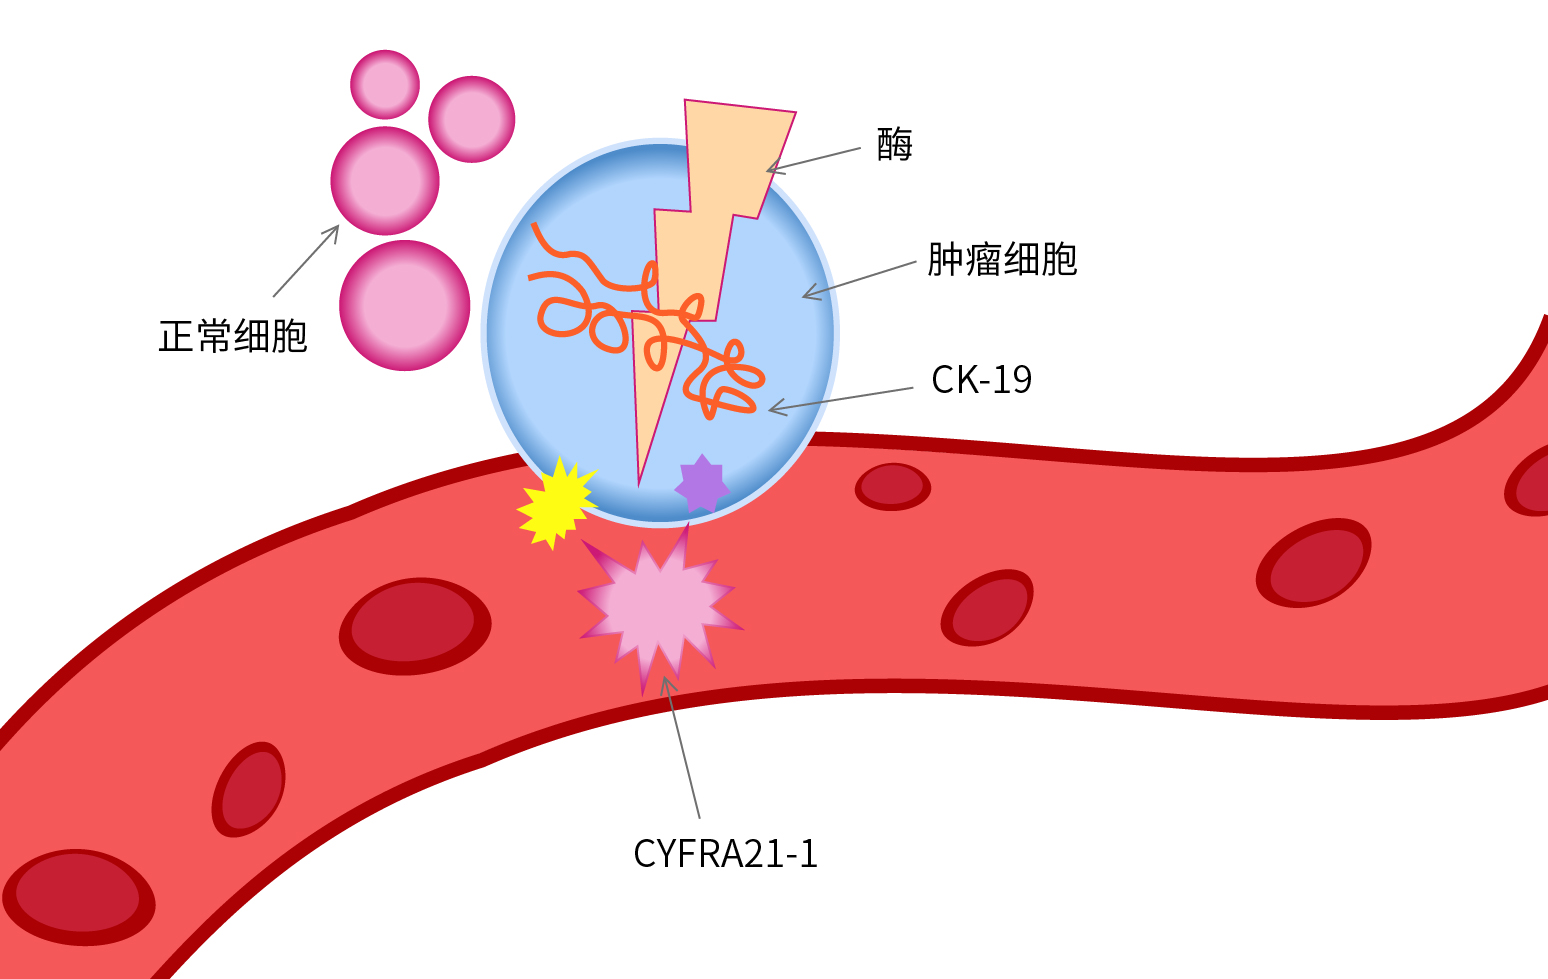 CYFRA21-1 metabolic mechanism